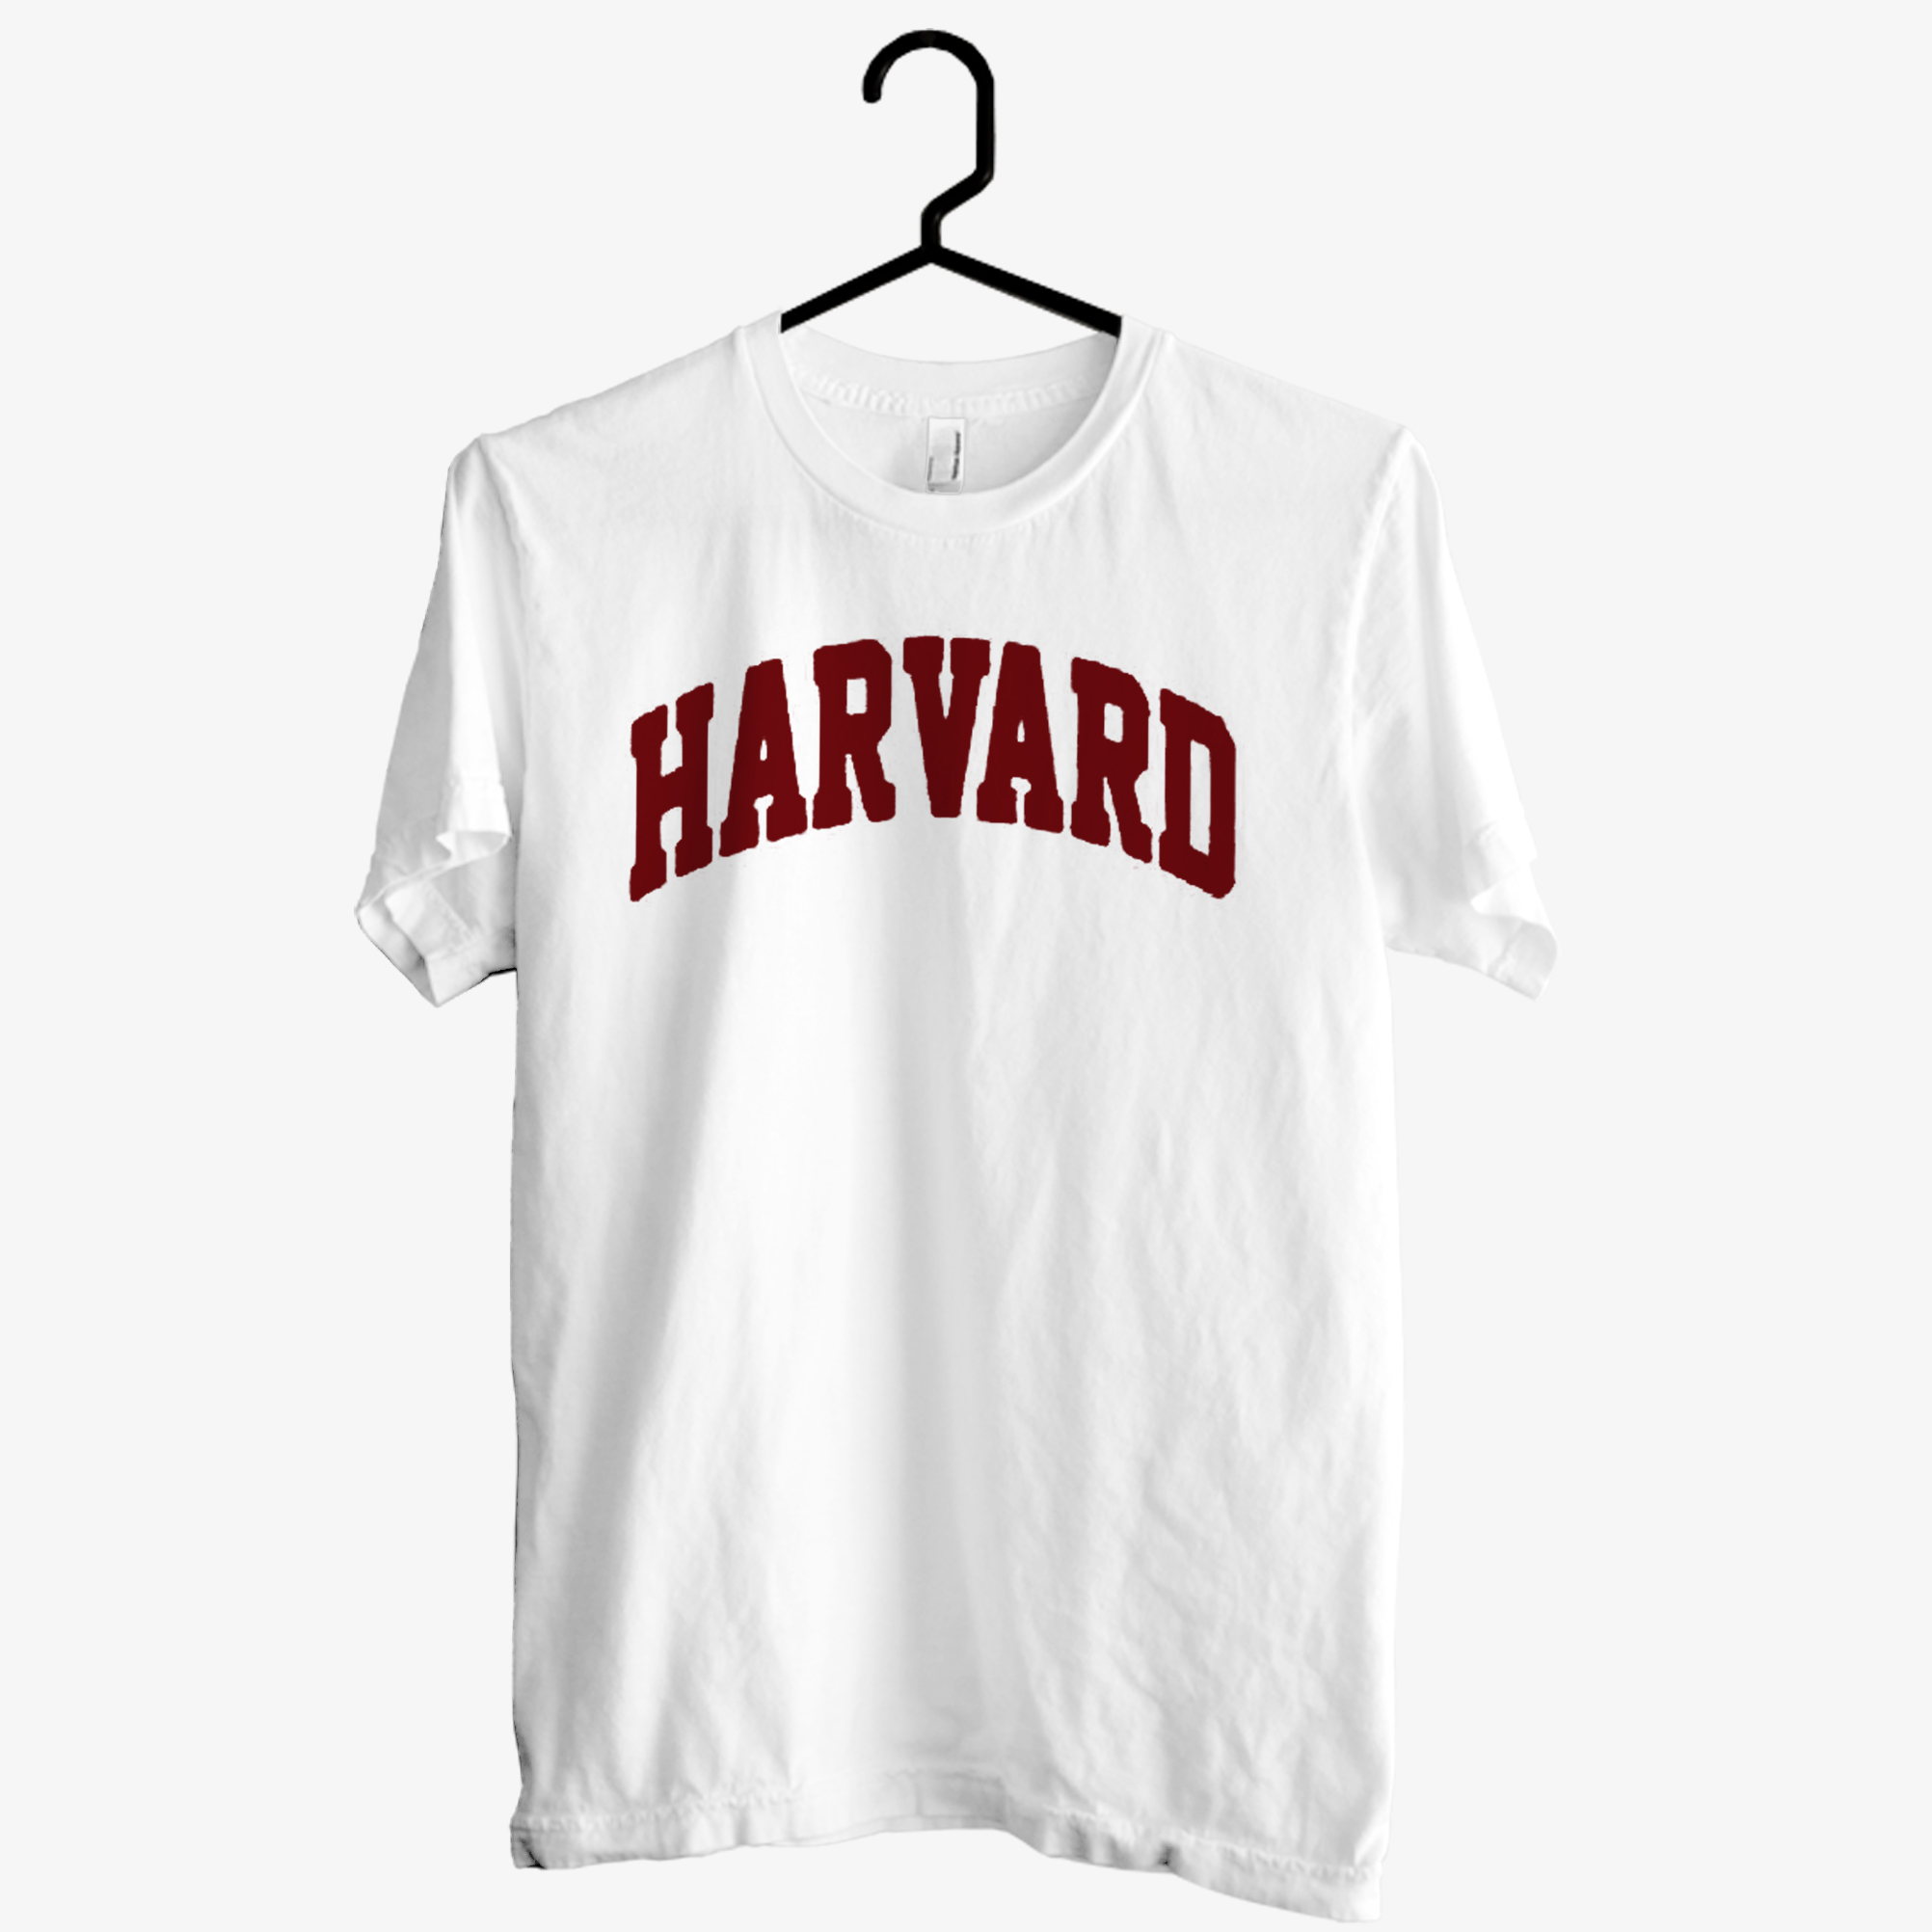 Harvard T shirt